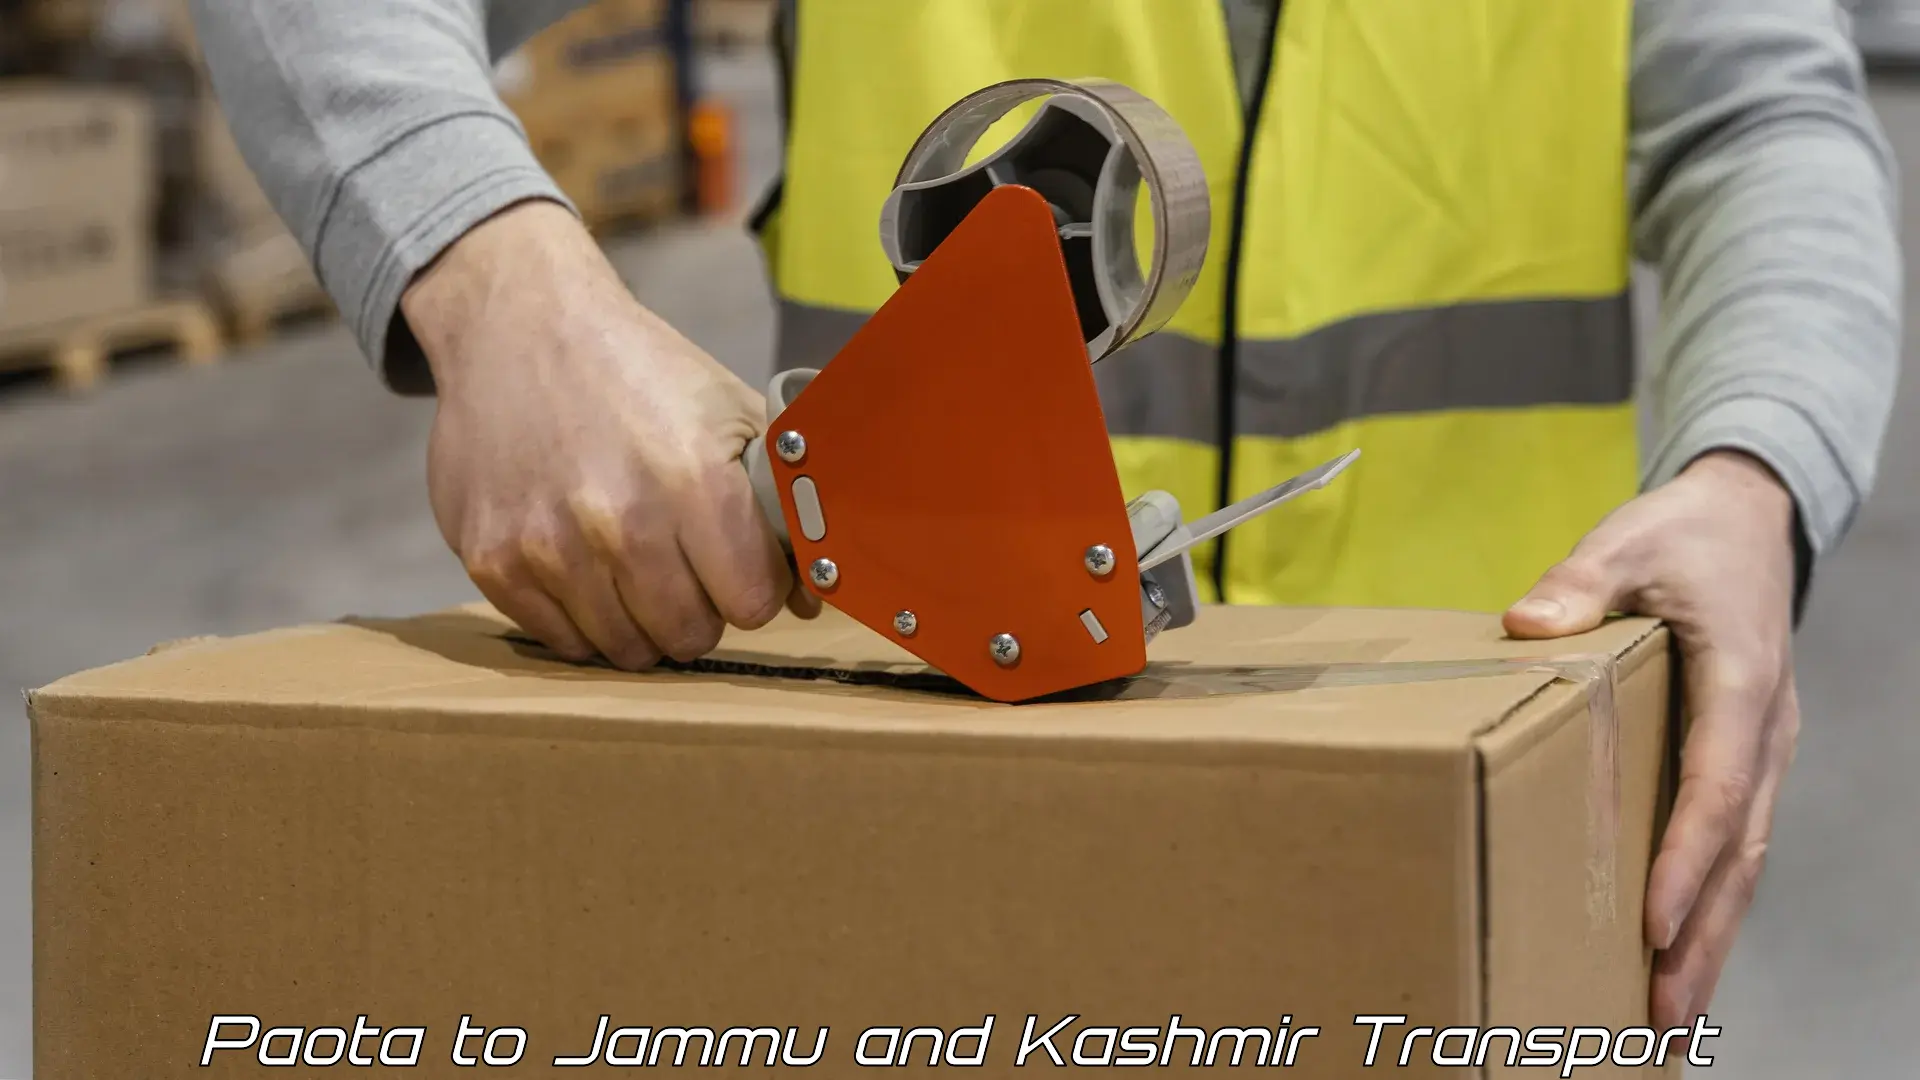 Lorry transport service Paota to Jammu and Kashmir